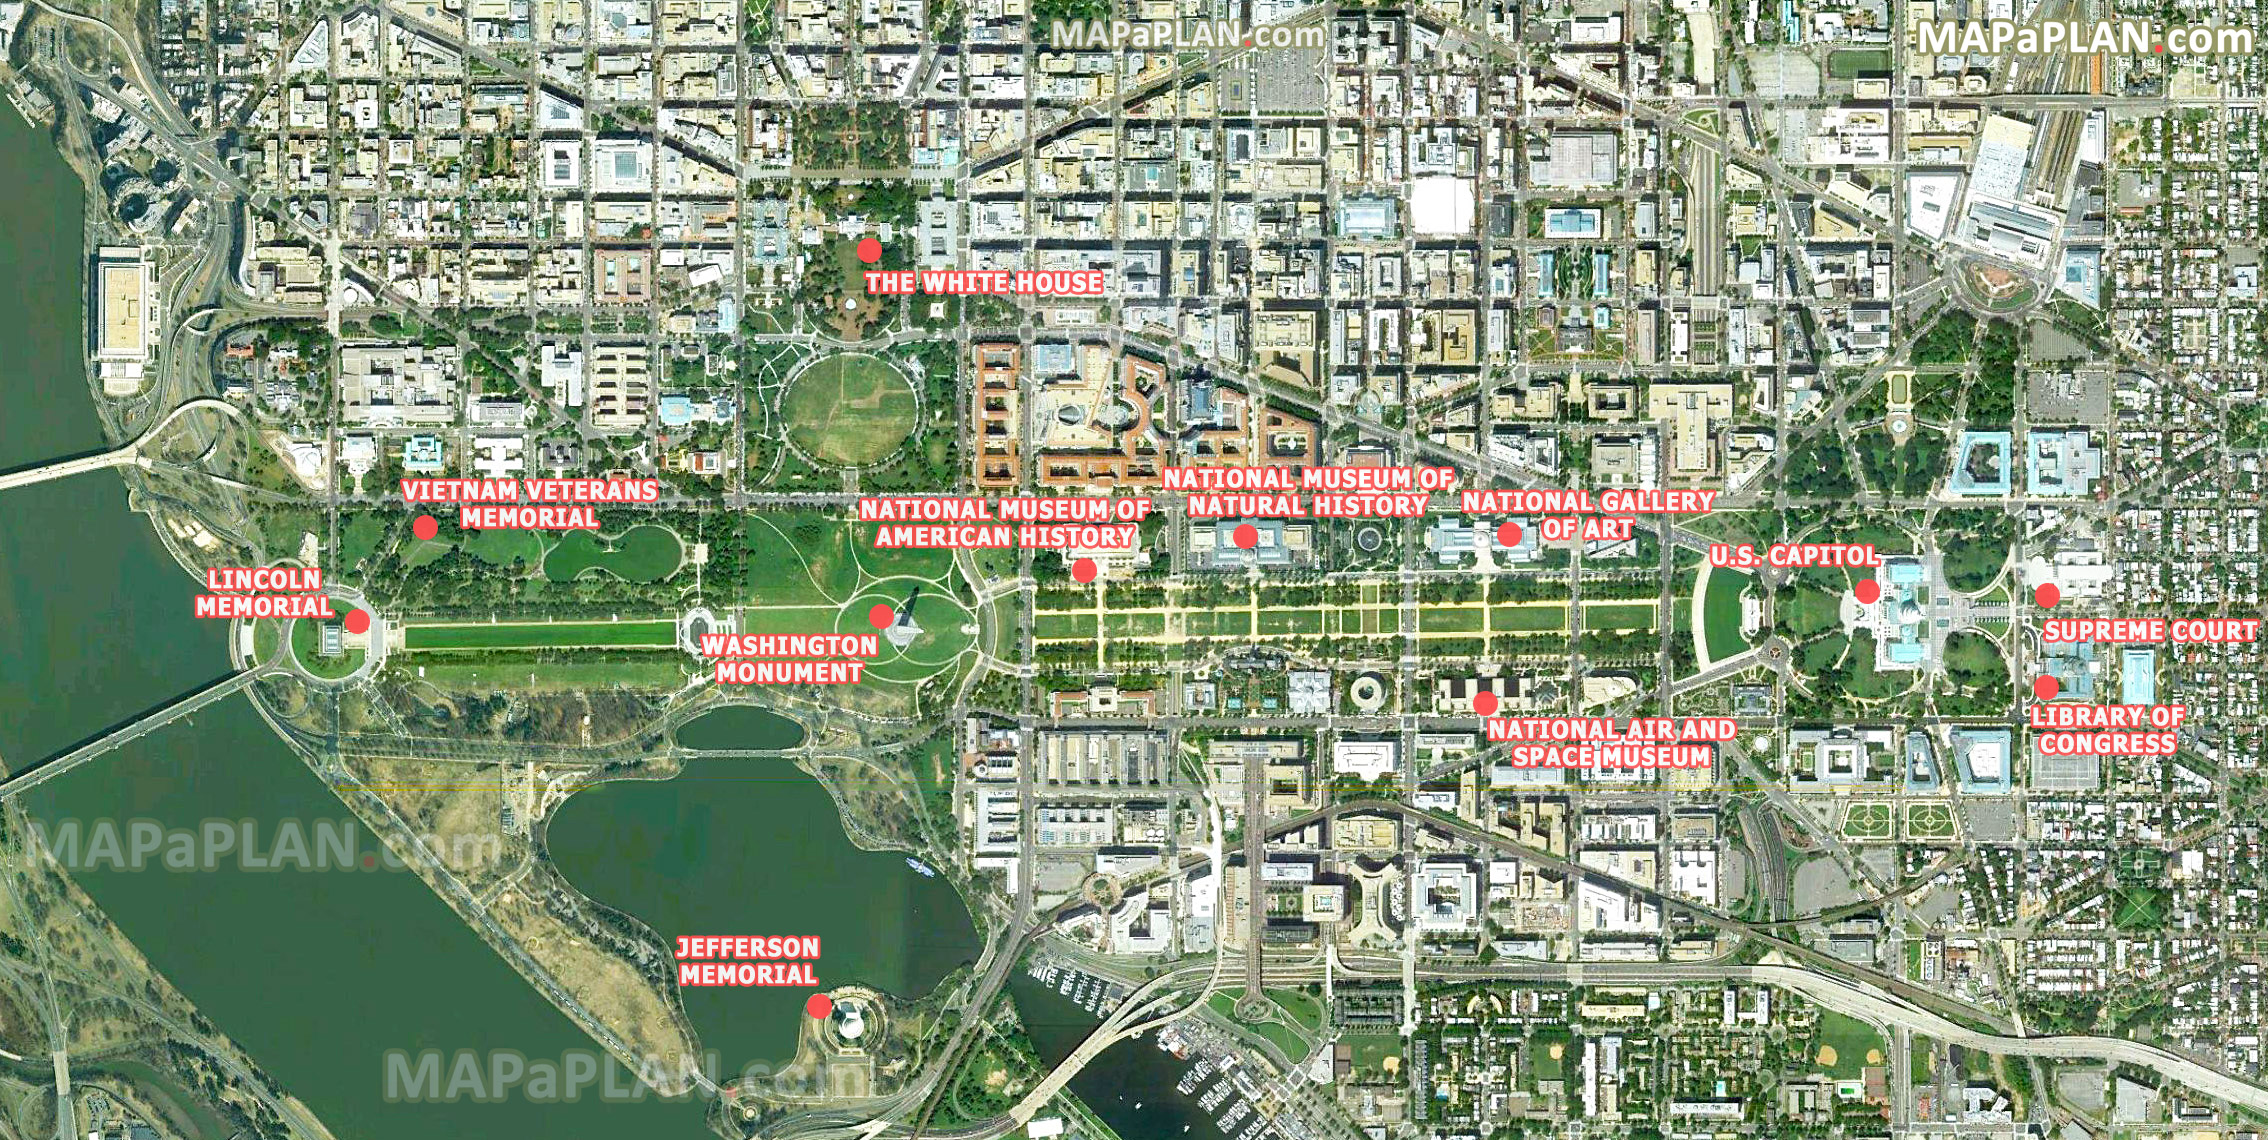 satellite image walking trail route best points interest washington monument white house capitol Washington DC top tourist attractions map